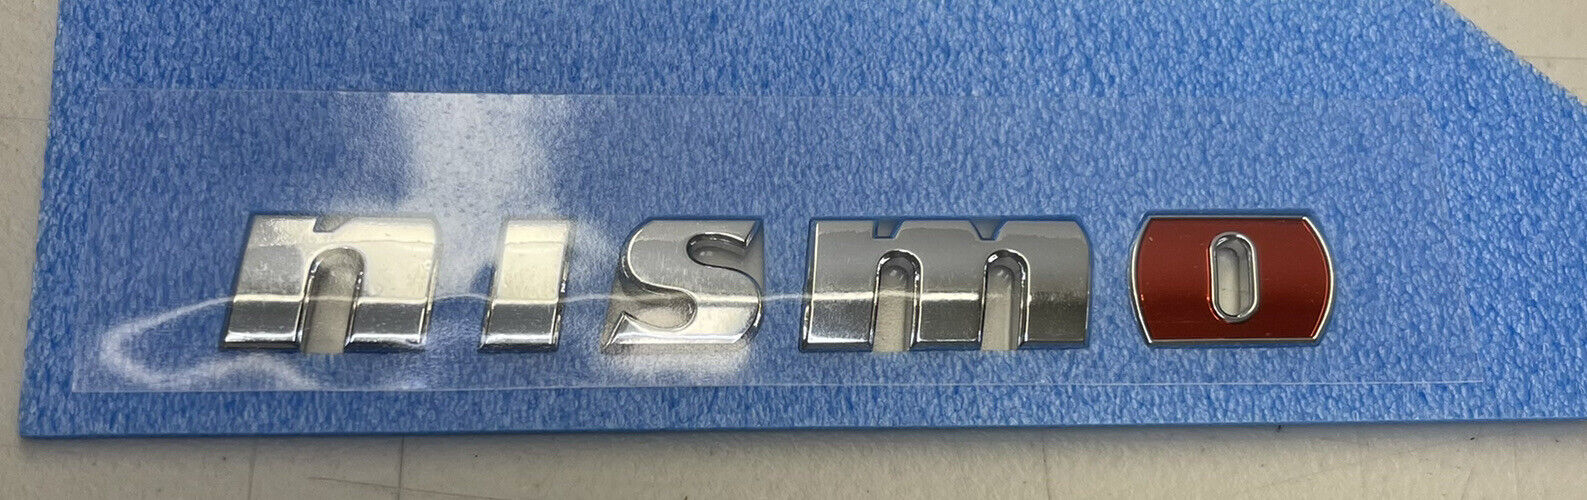 NISSAN 370Z 2014-2015 Bumper Cover Emblem \